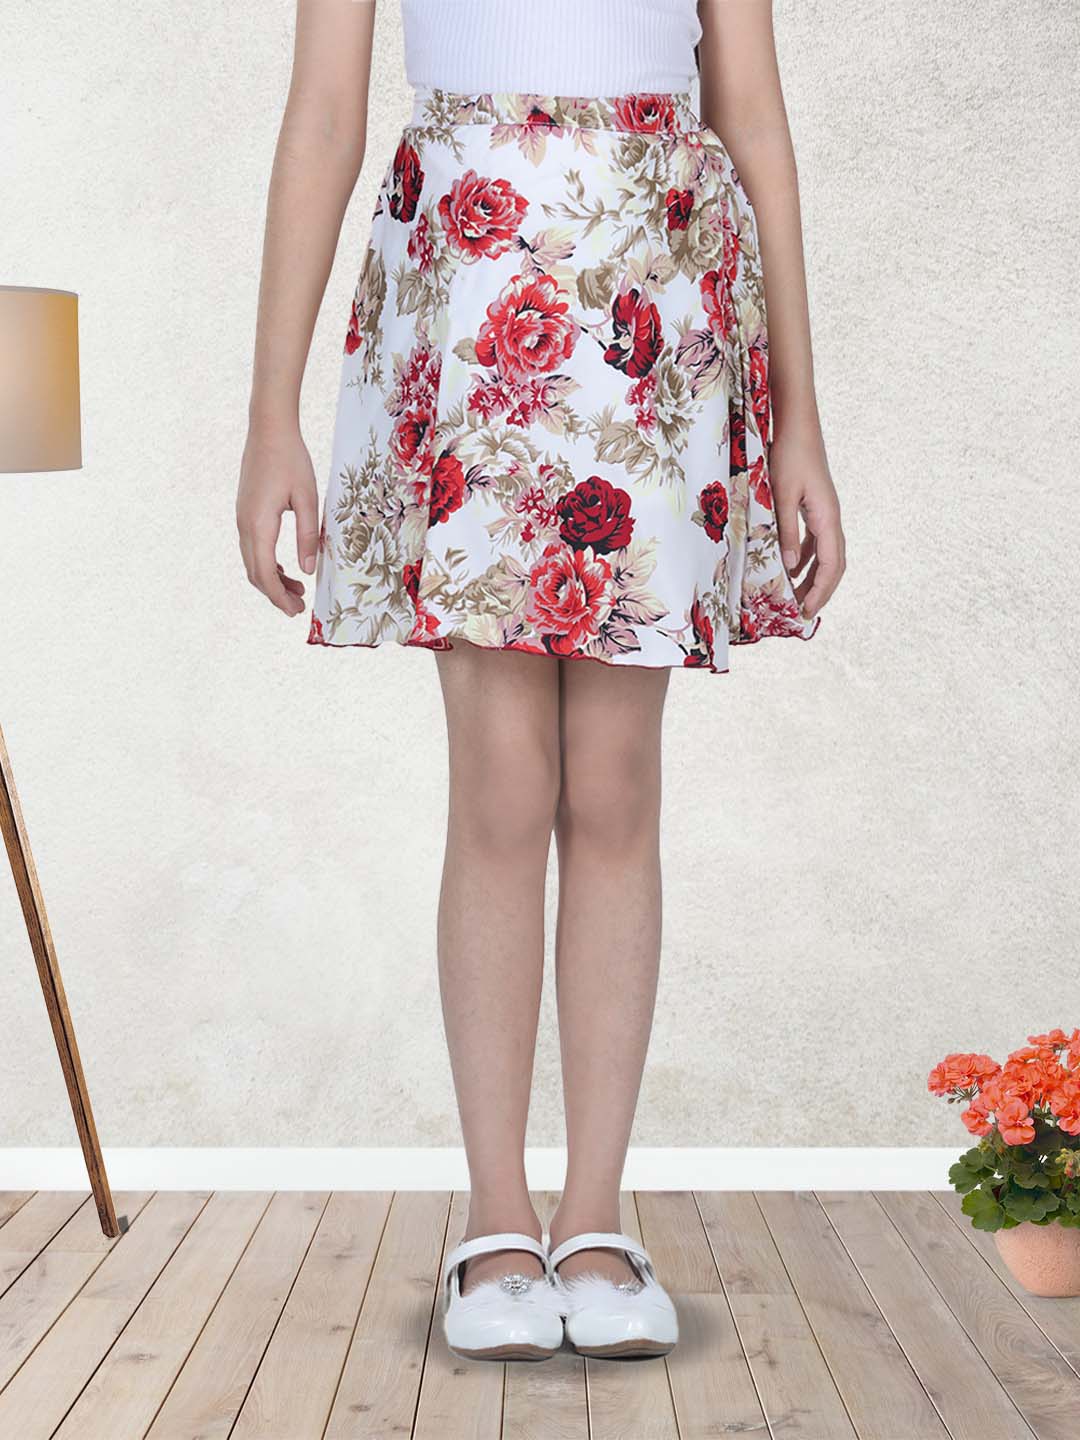 Cutiekins Floral Printed Skirt For Girls - Cream & Maroon